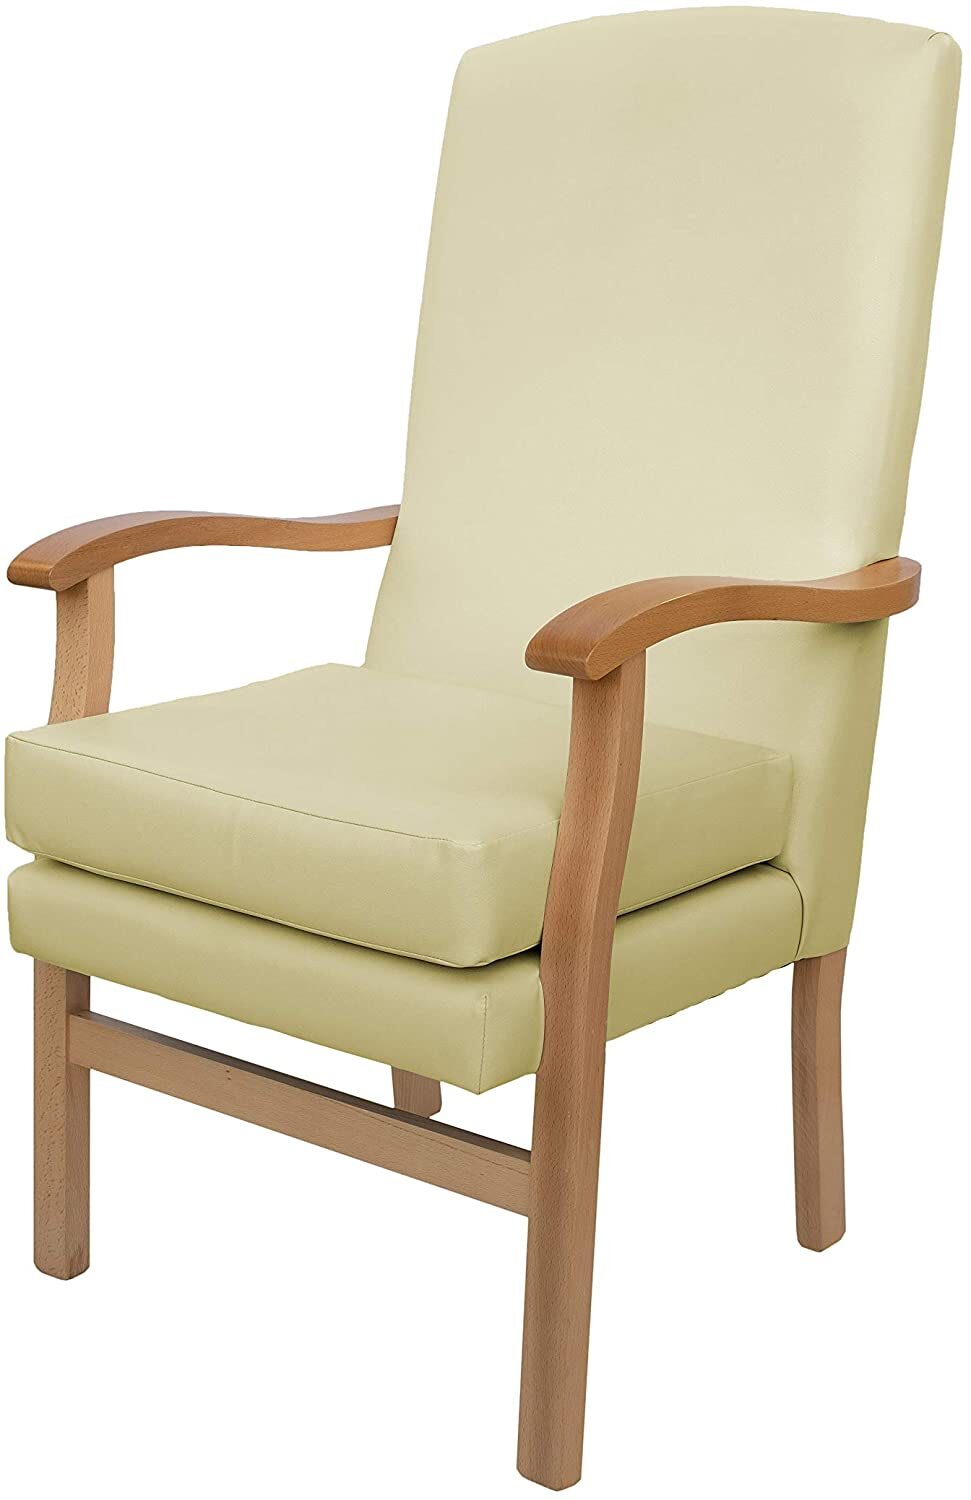 Orthopedic Chair for Living Room